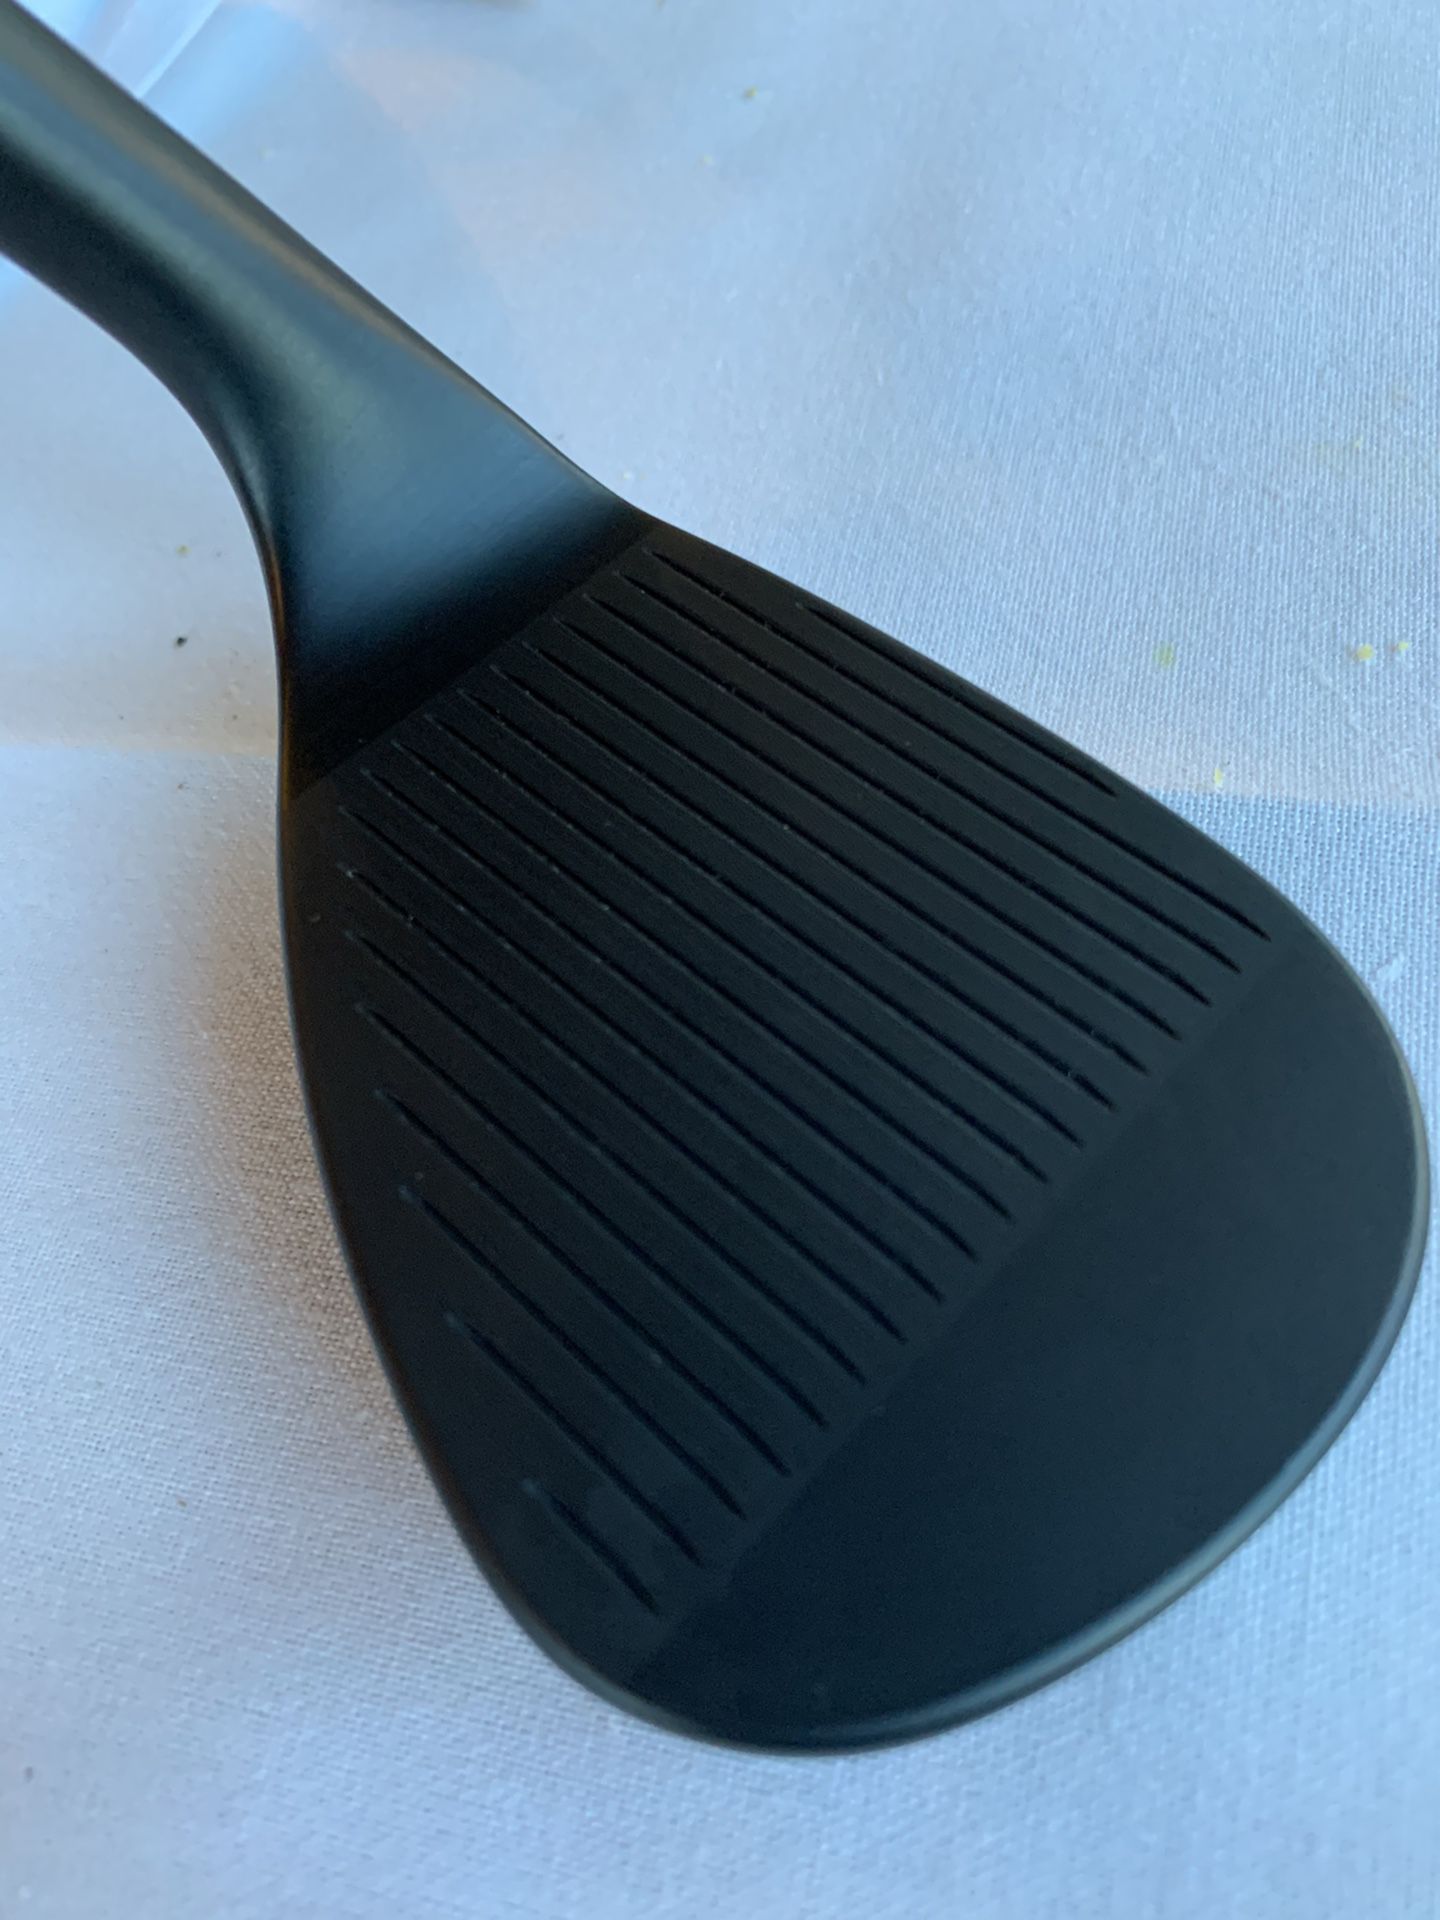 Golf Clubs Ping Glide 2.0 black finish 60 degree wedge.